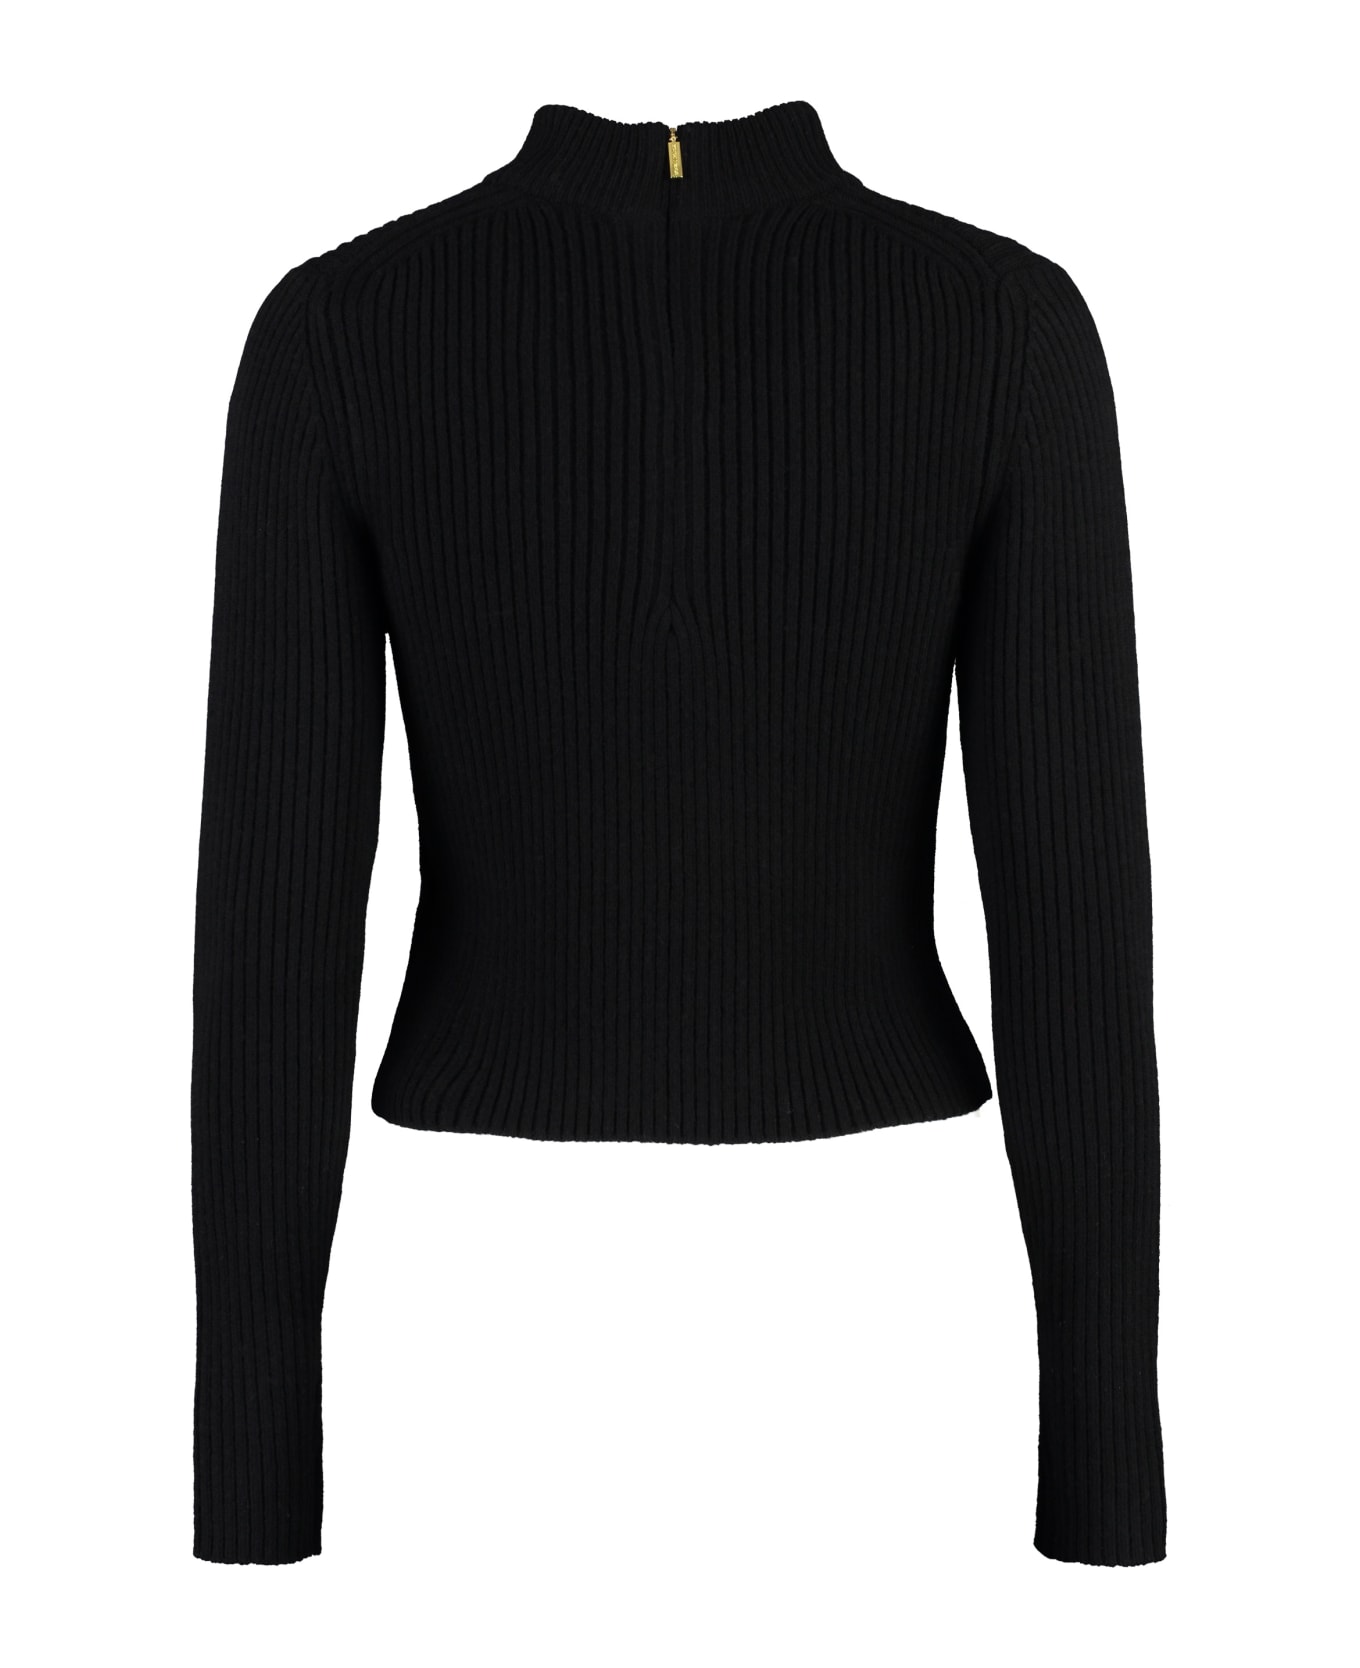 Michael Kors Collection Merino Wool Sweater - Black